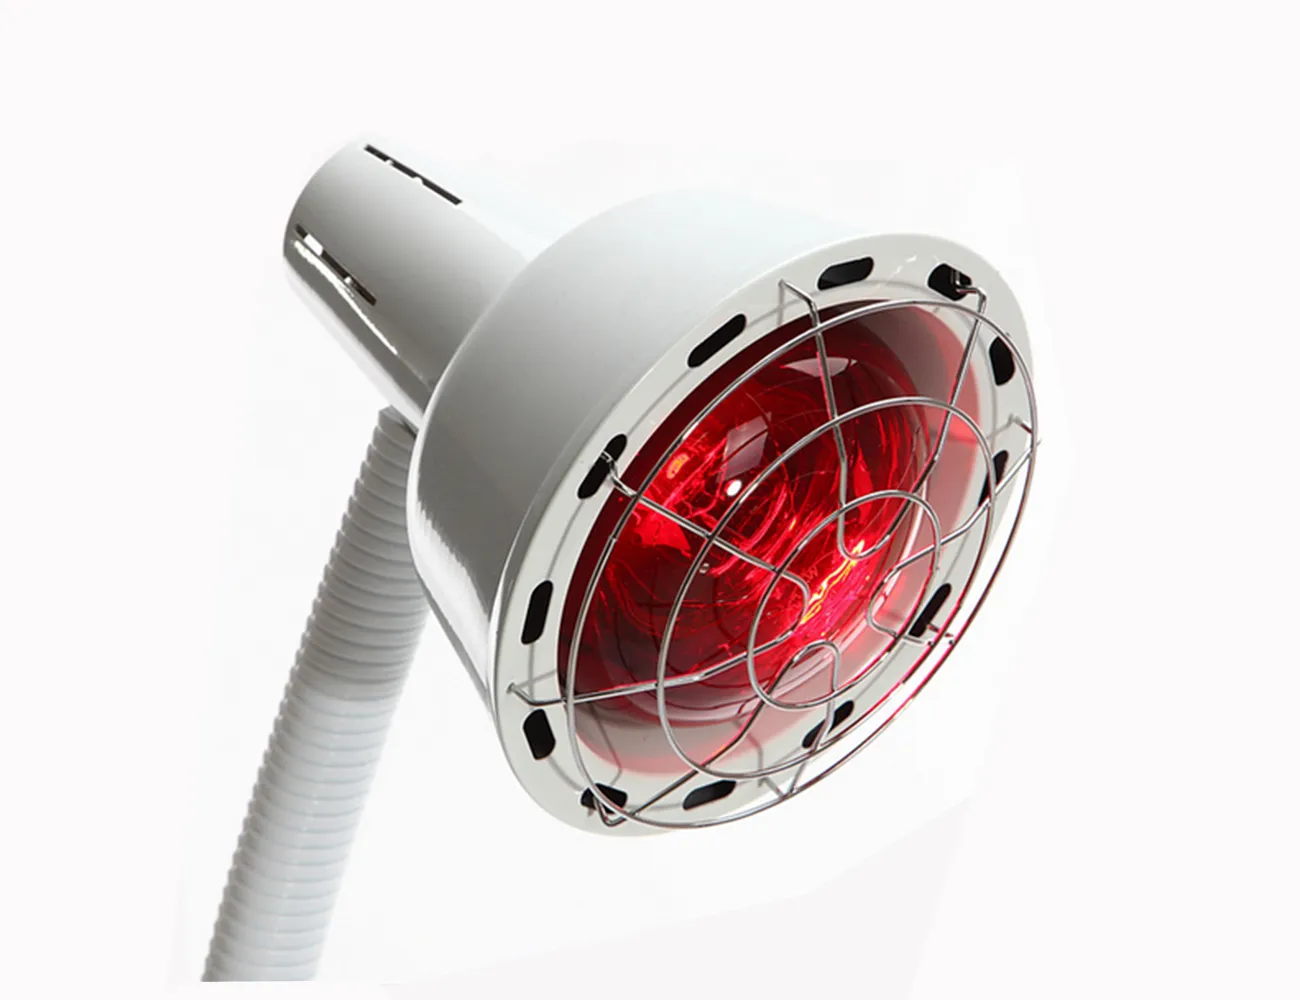 Elitzia ETH315 Desktop Compact مصباح التدفئة الحرارية بالأشعة تحت الحمراء البعيدة الاسترخاء في الجسم لتخفيف الآلام 2 أنواع الخيارات